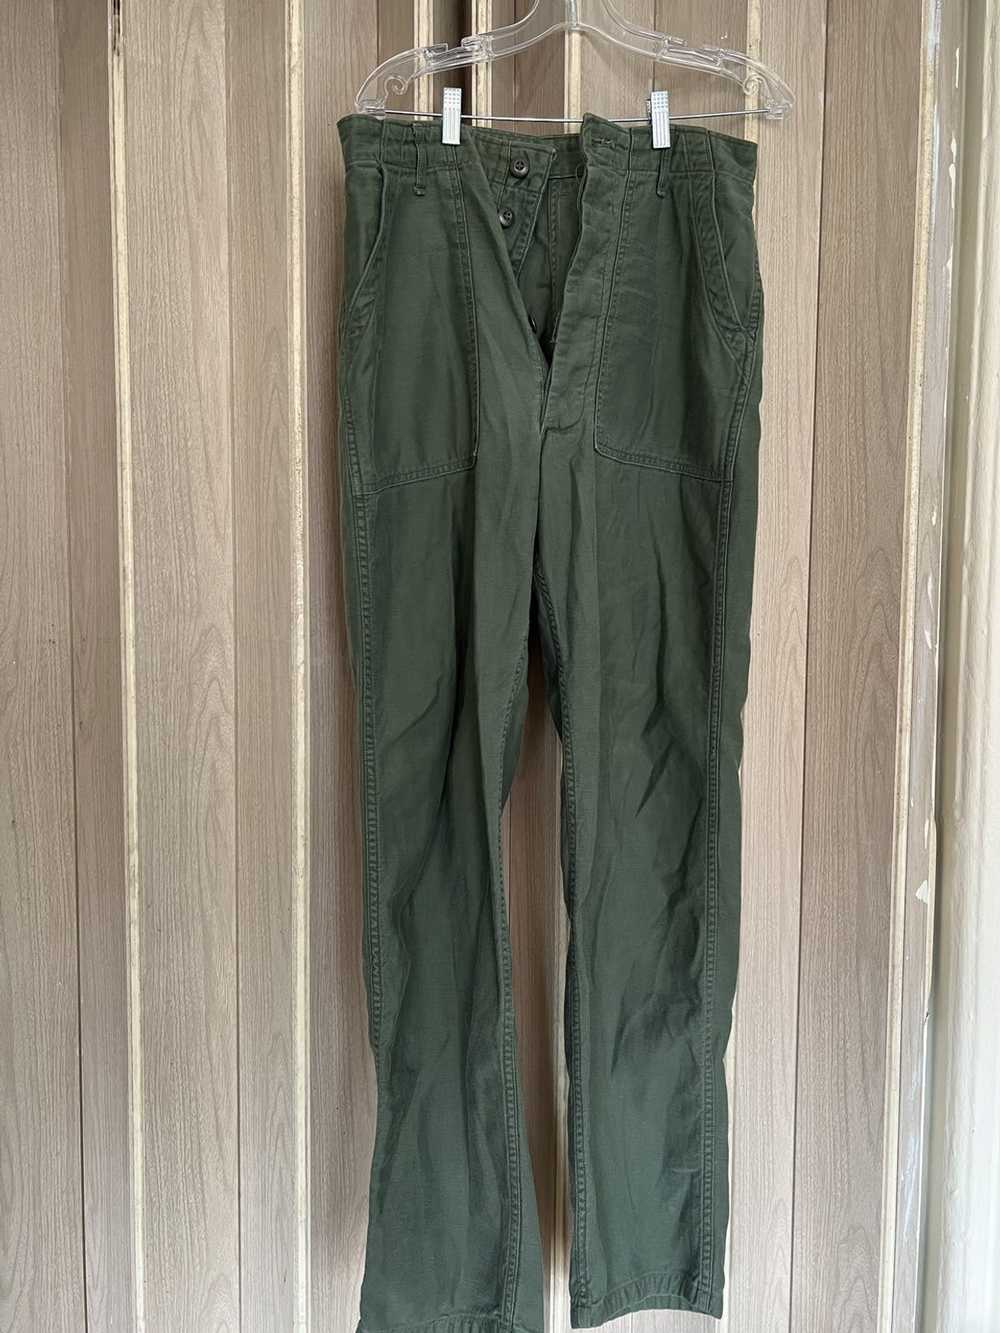 Vintage Vintage green army trouser pants - image 1